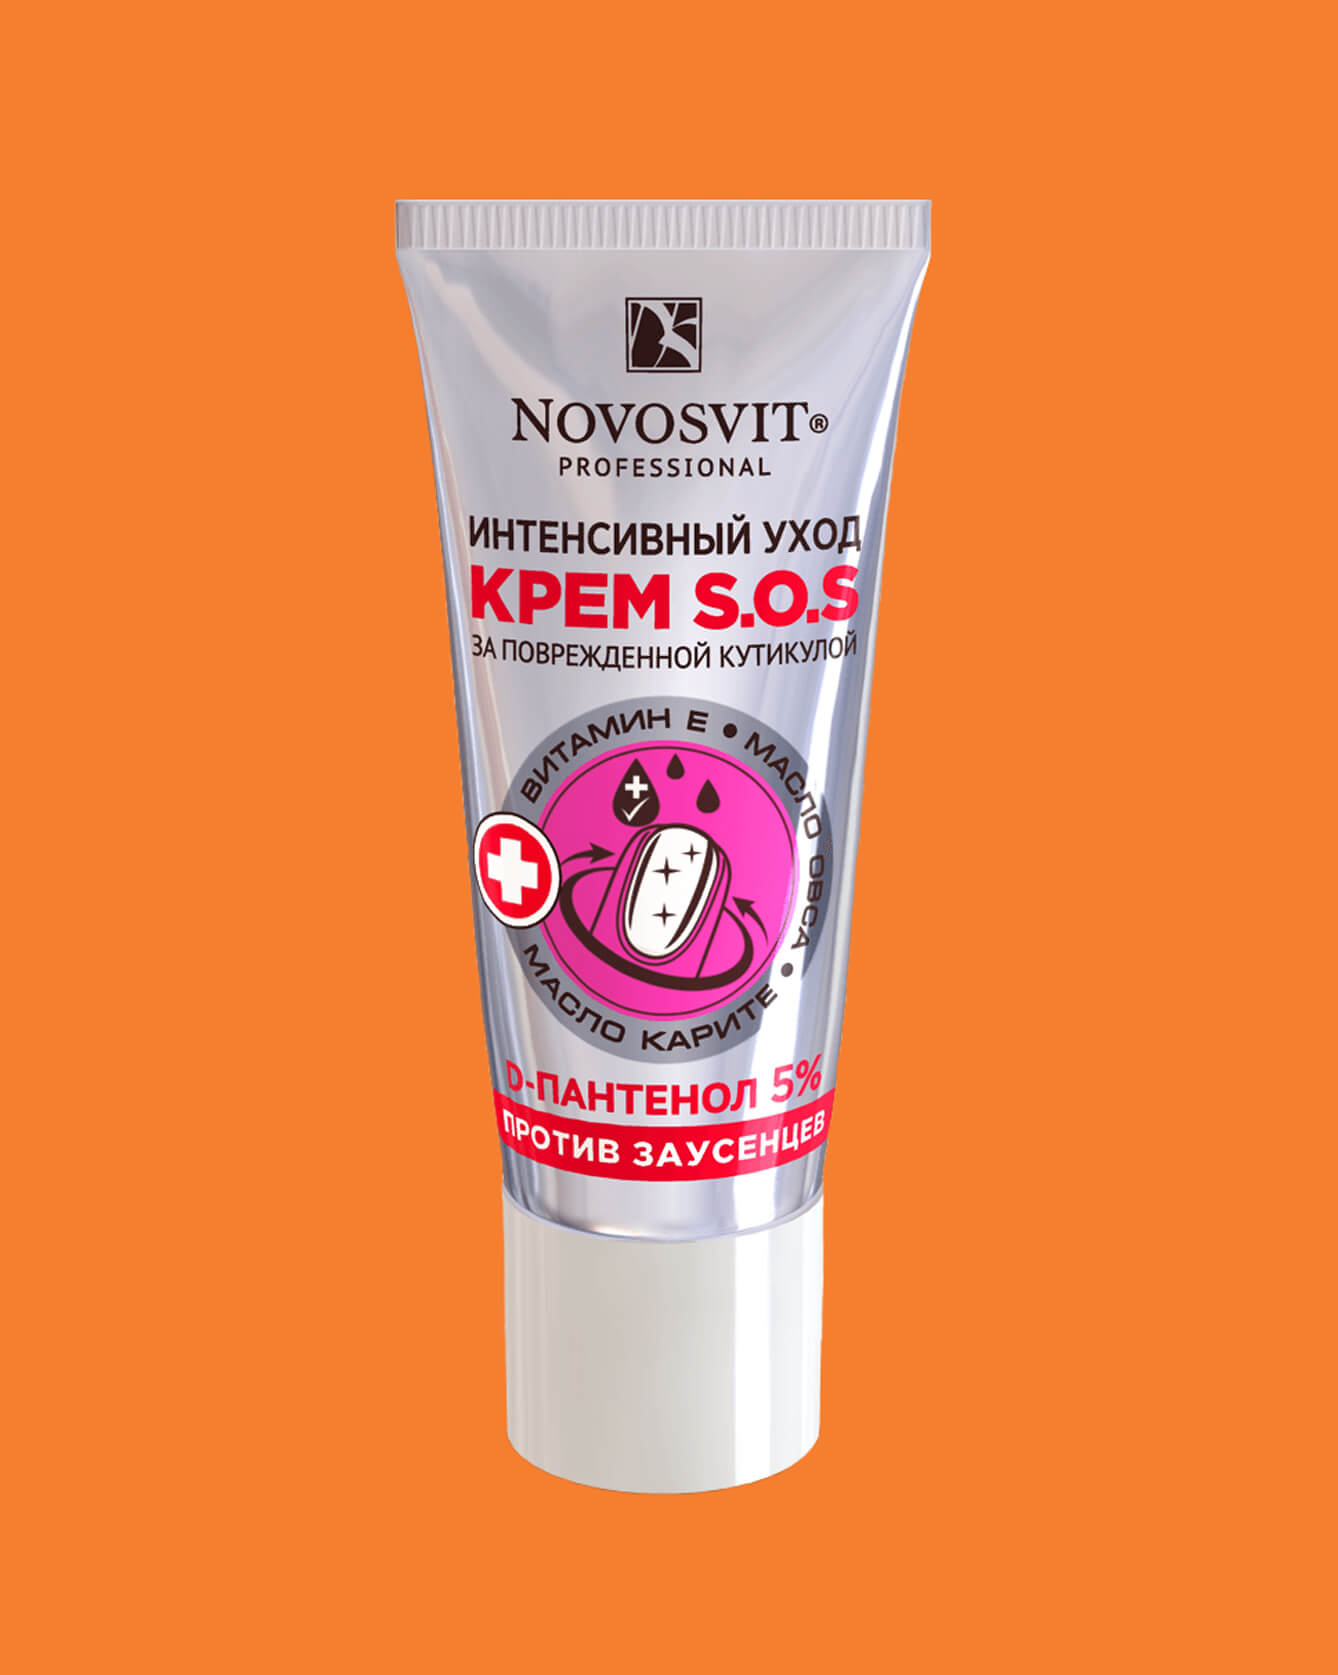 Product photo of Novosit SOS Hand Cream.